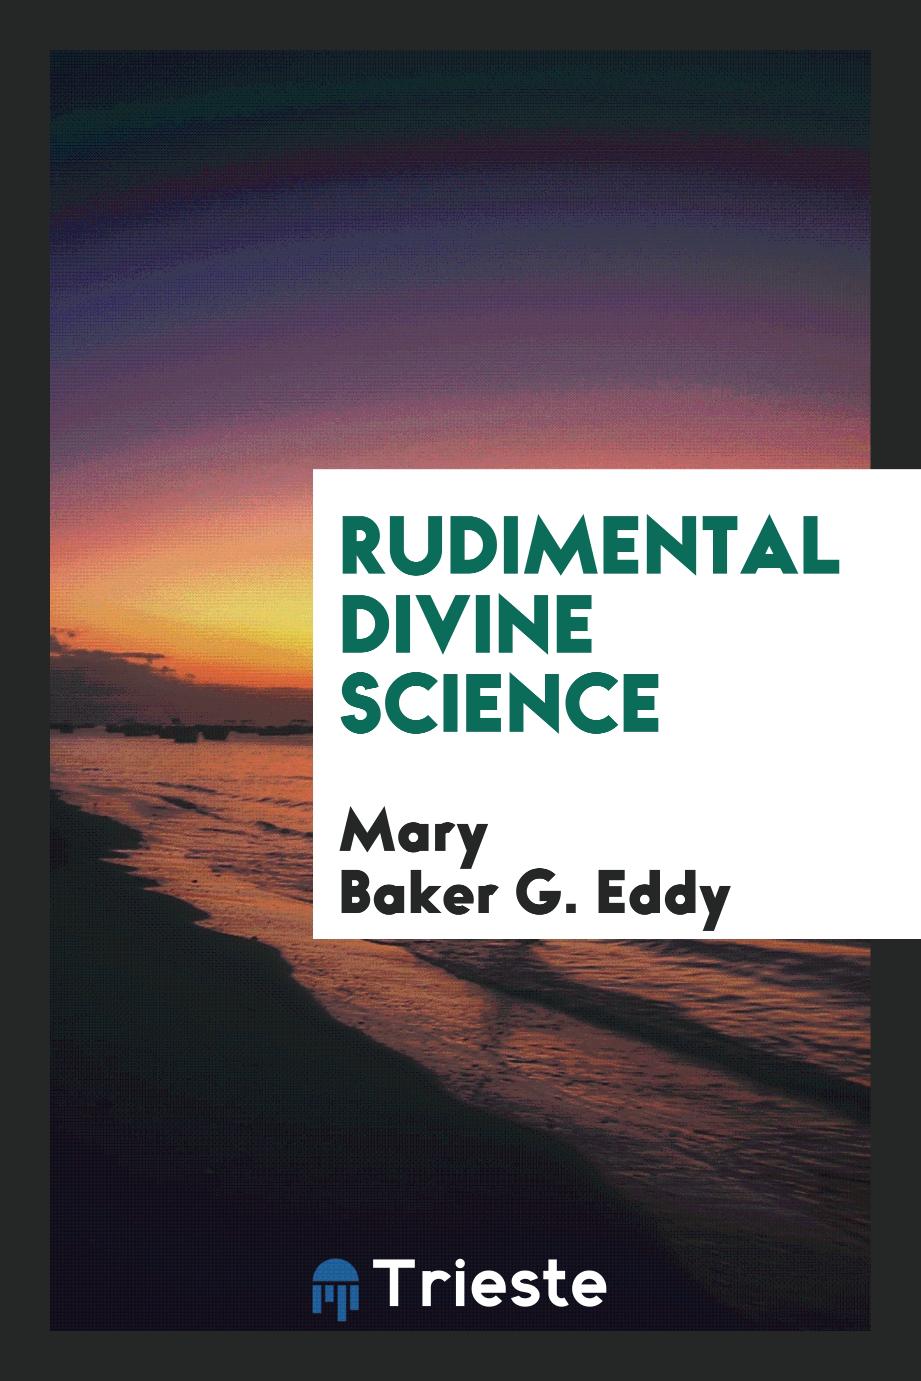 Rudimental divine science